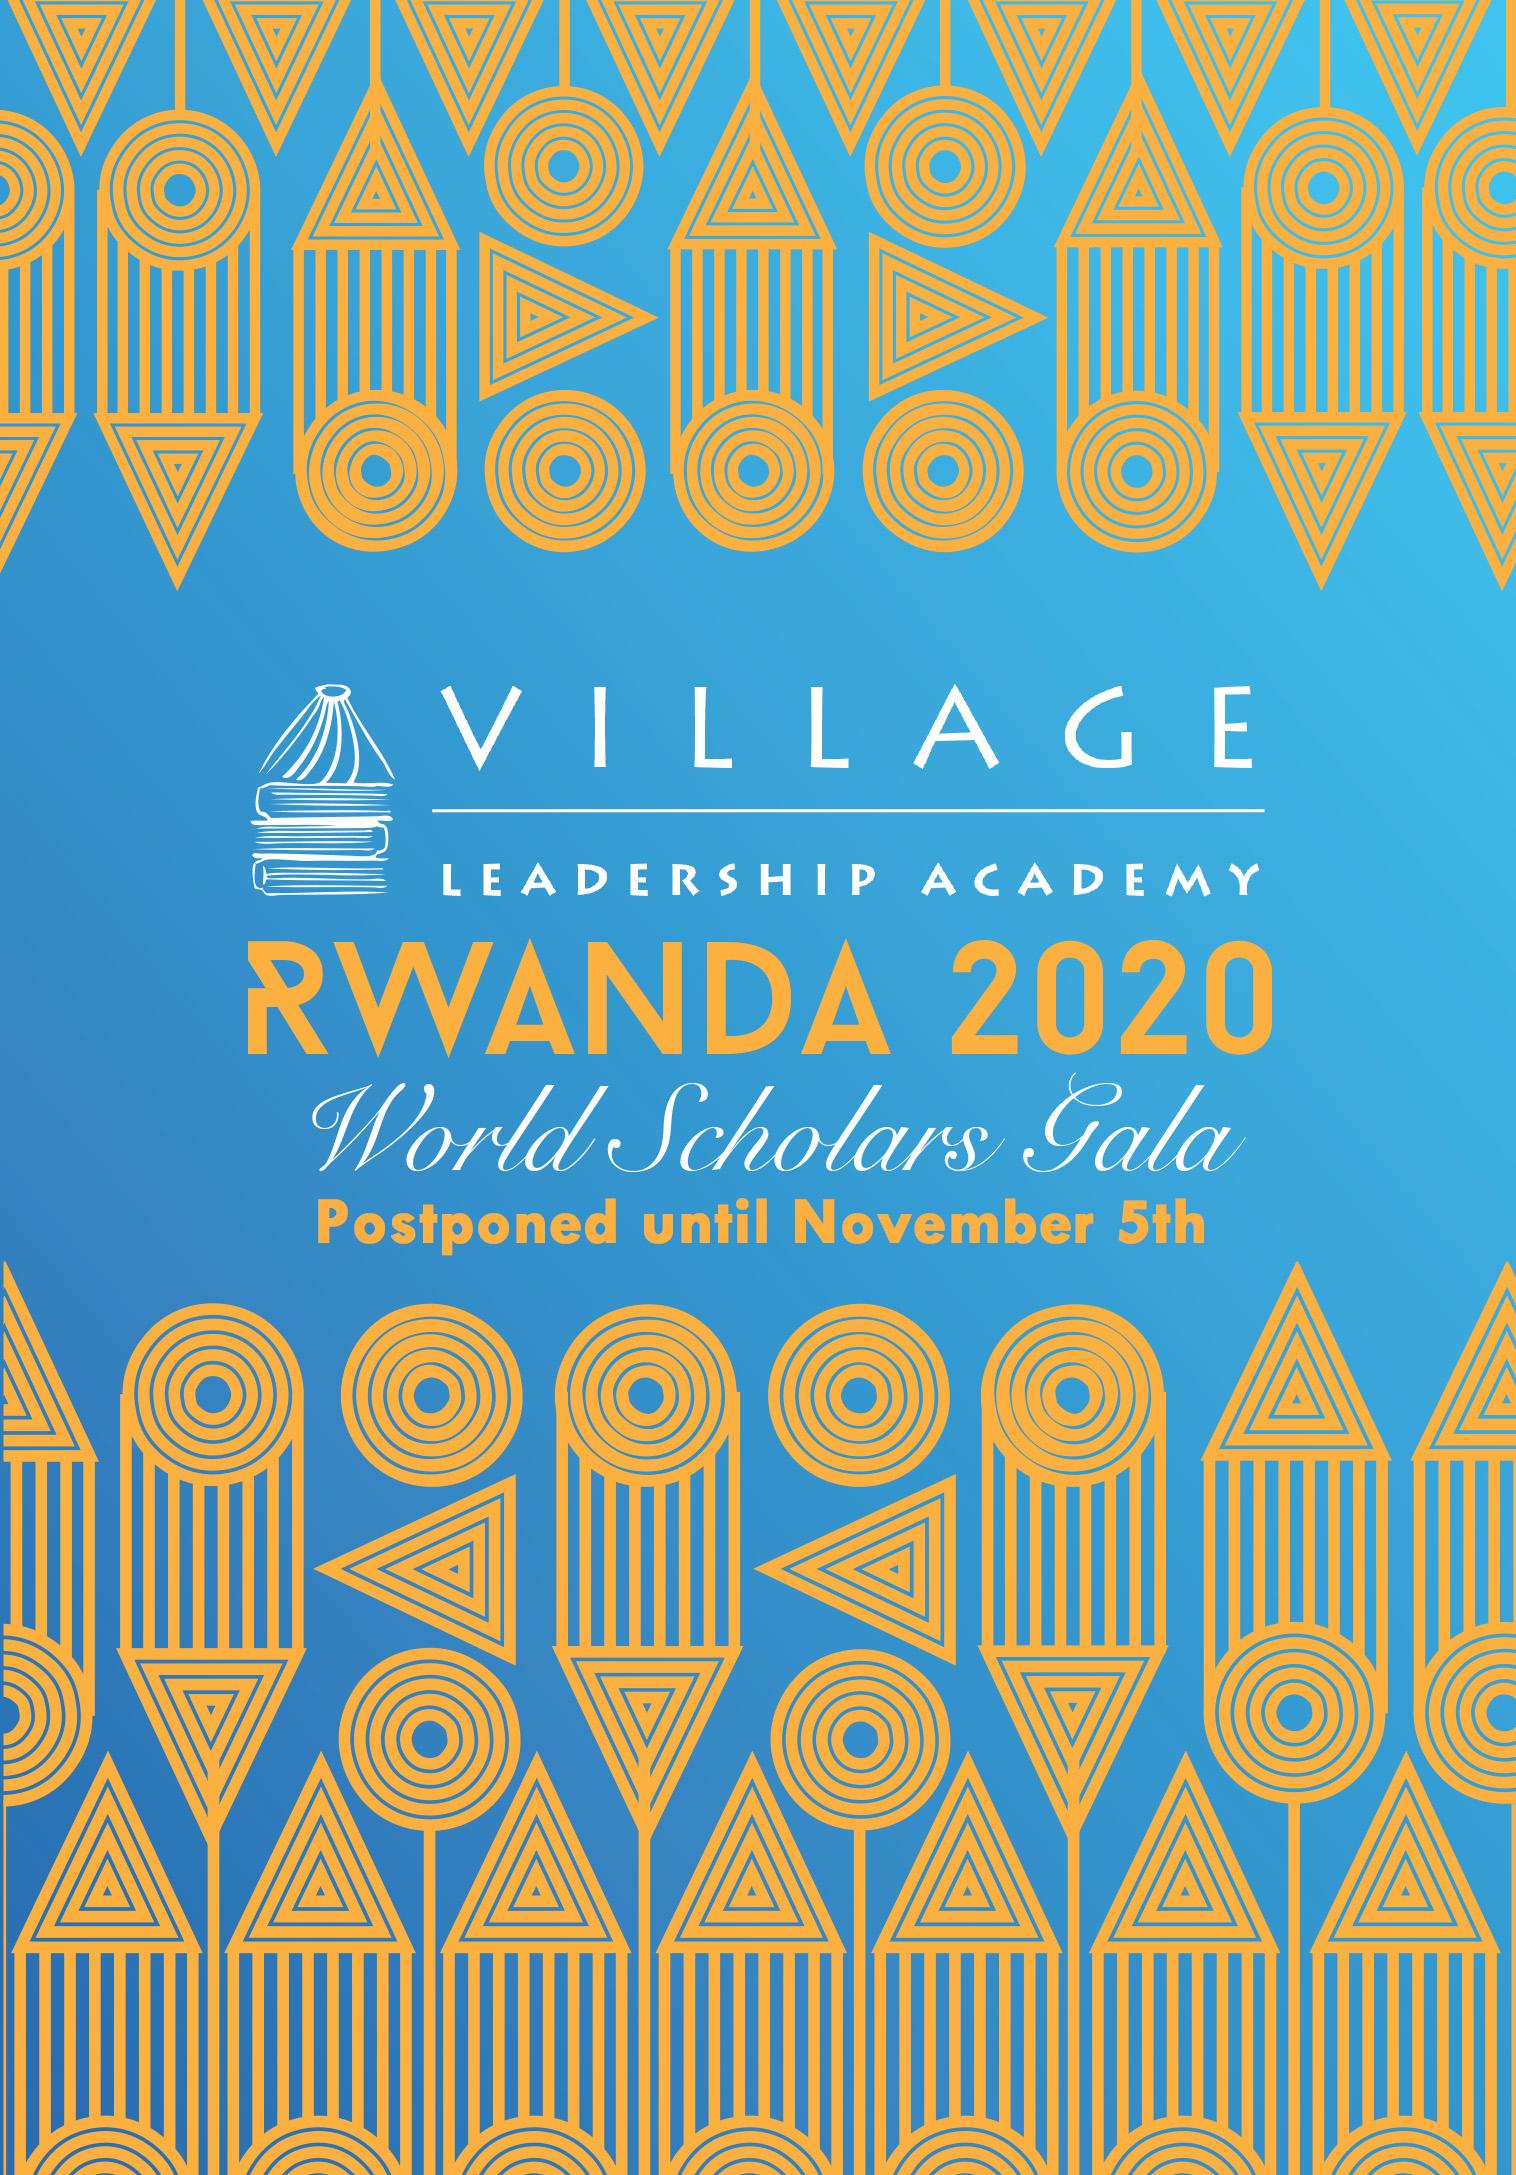 Village Leadership Academy's Rwanda 2020 World Scholars Gala